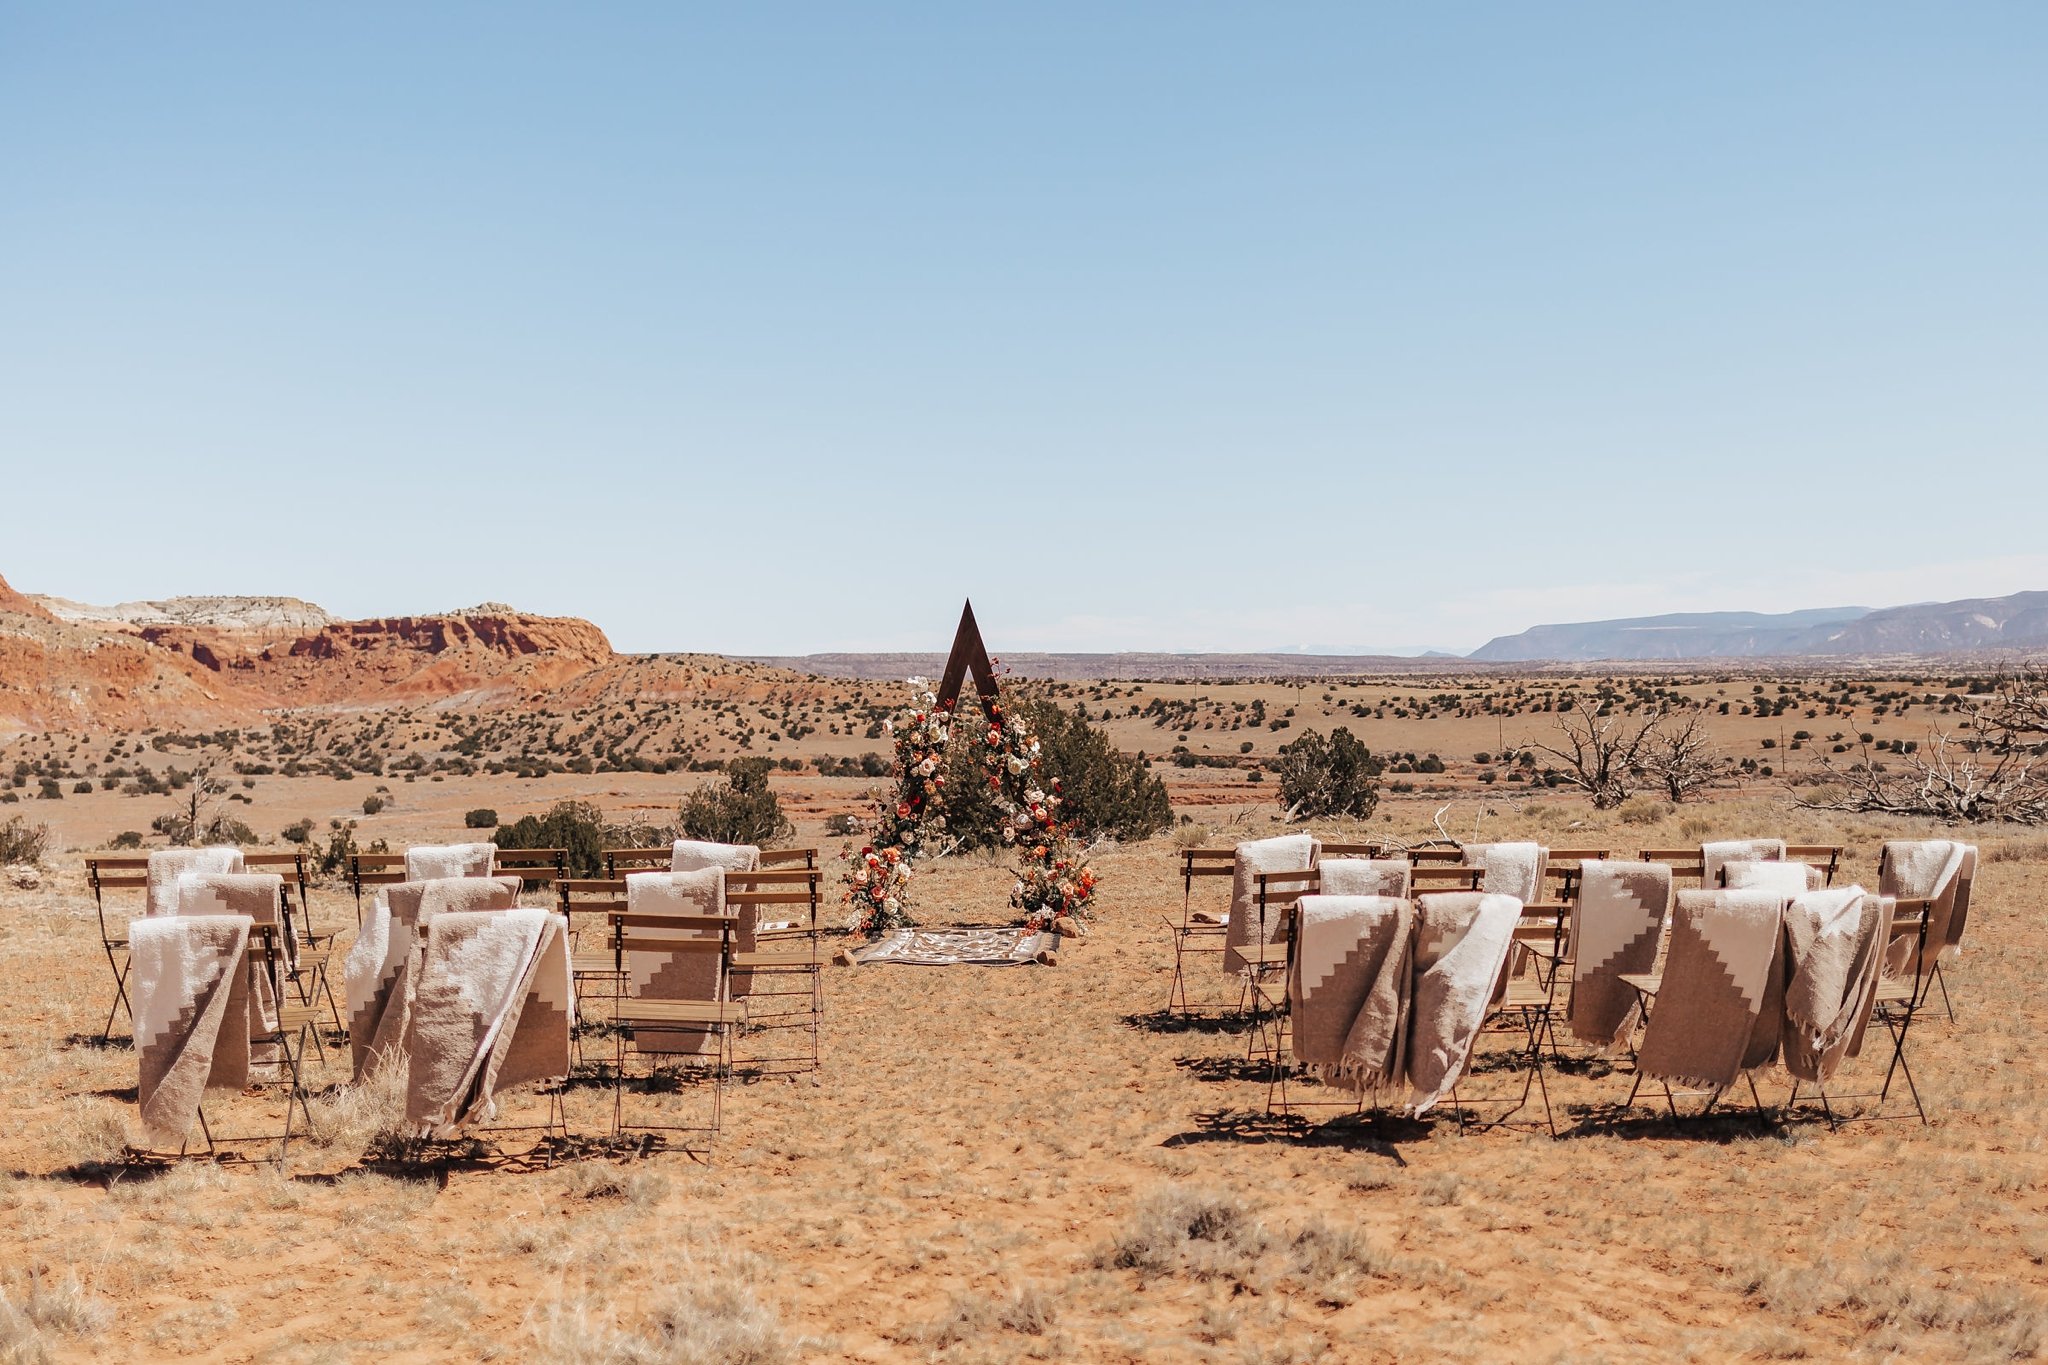 Intimate Southwestern Desert Wedding at Moab Under Canvas